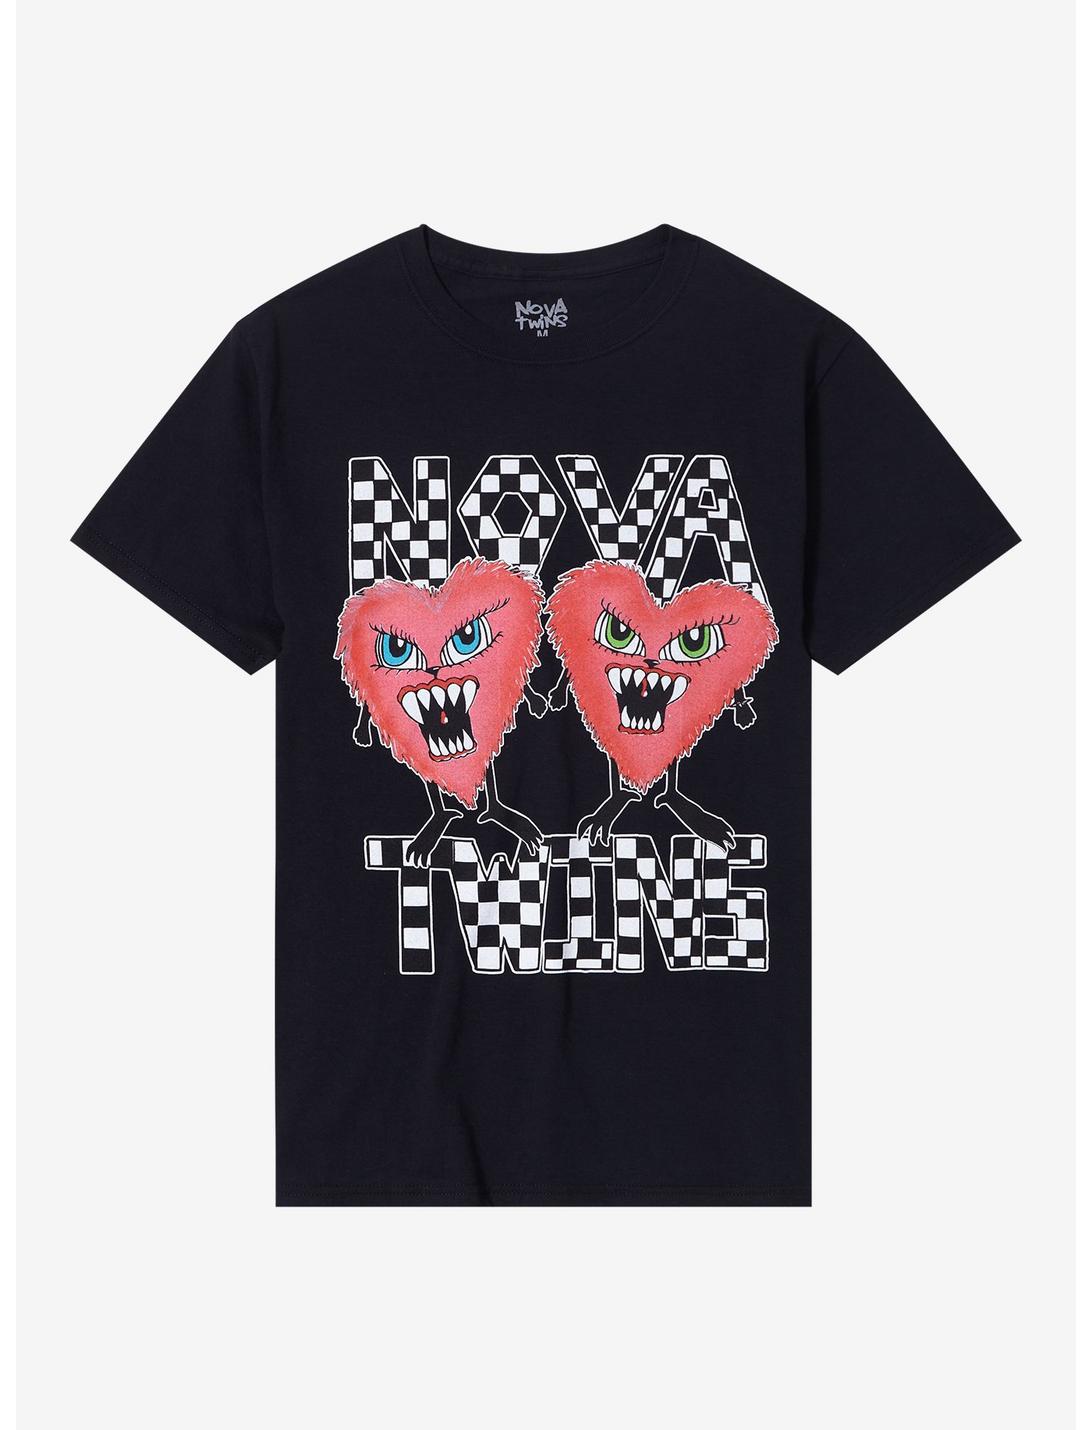 Nova Twins Twon Hearts Boyfriend Fit Girls T-Shirt, BLACK, hi-res